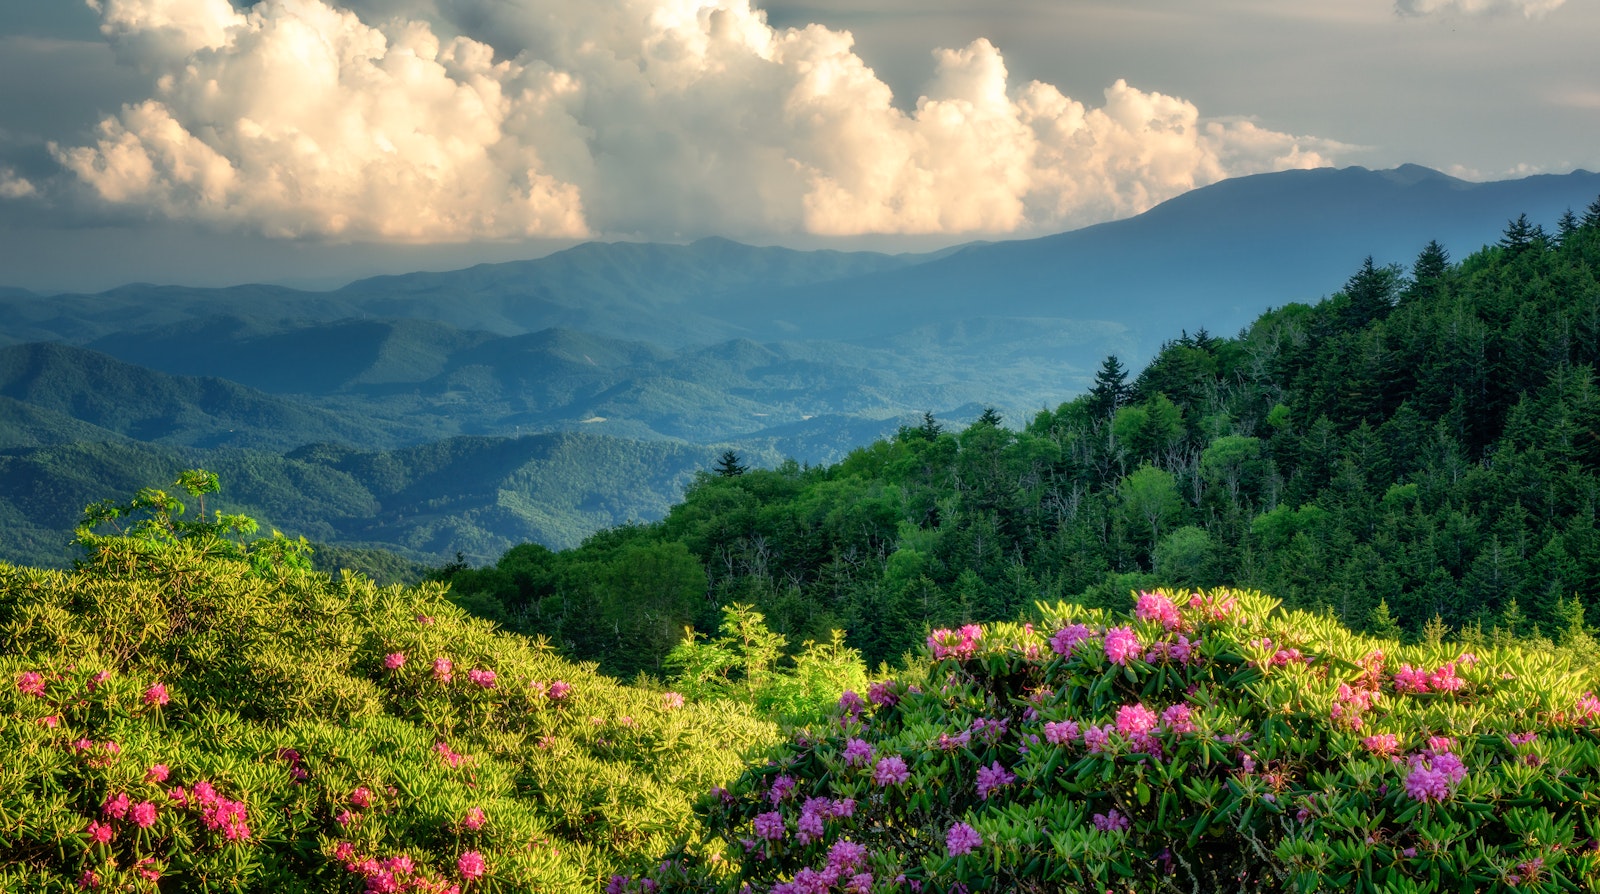 Blooming flowers dot a mountainous landscape